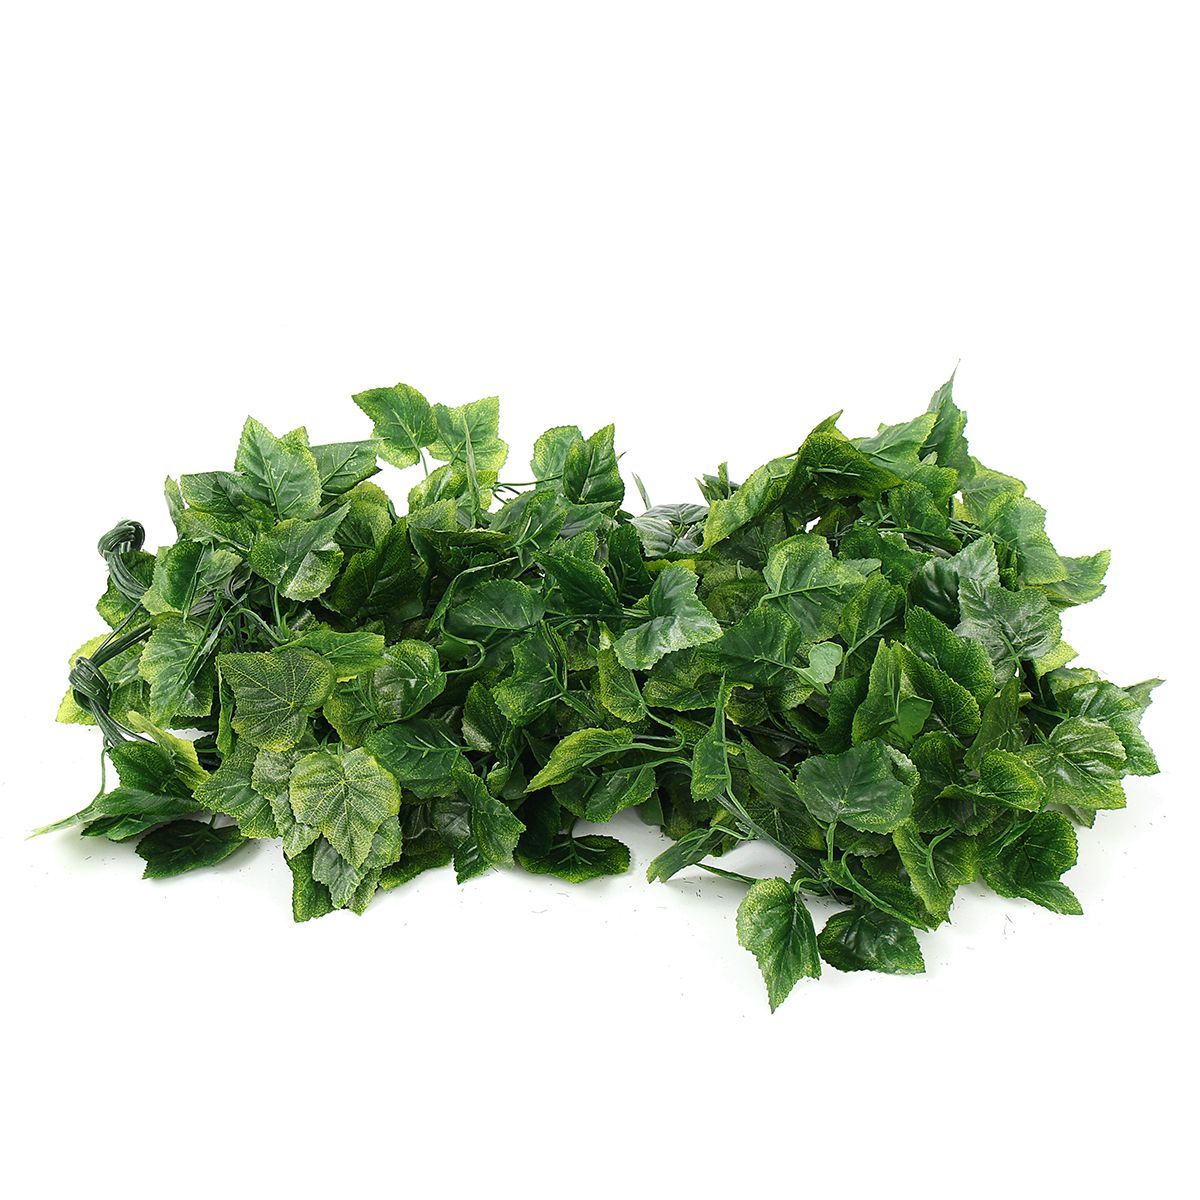 198cm-Artificial-Ivy-Leaf-Vine-Foliage-Green-Hanging-Garland-Plant-Home-Wedding-Decorations-1557782